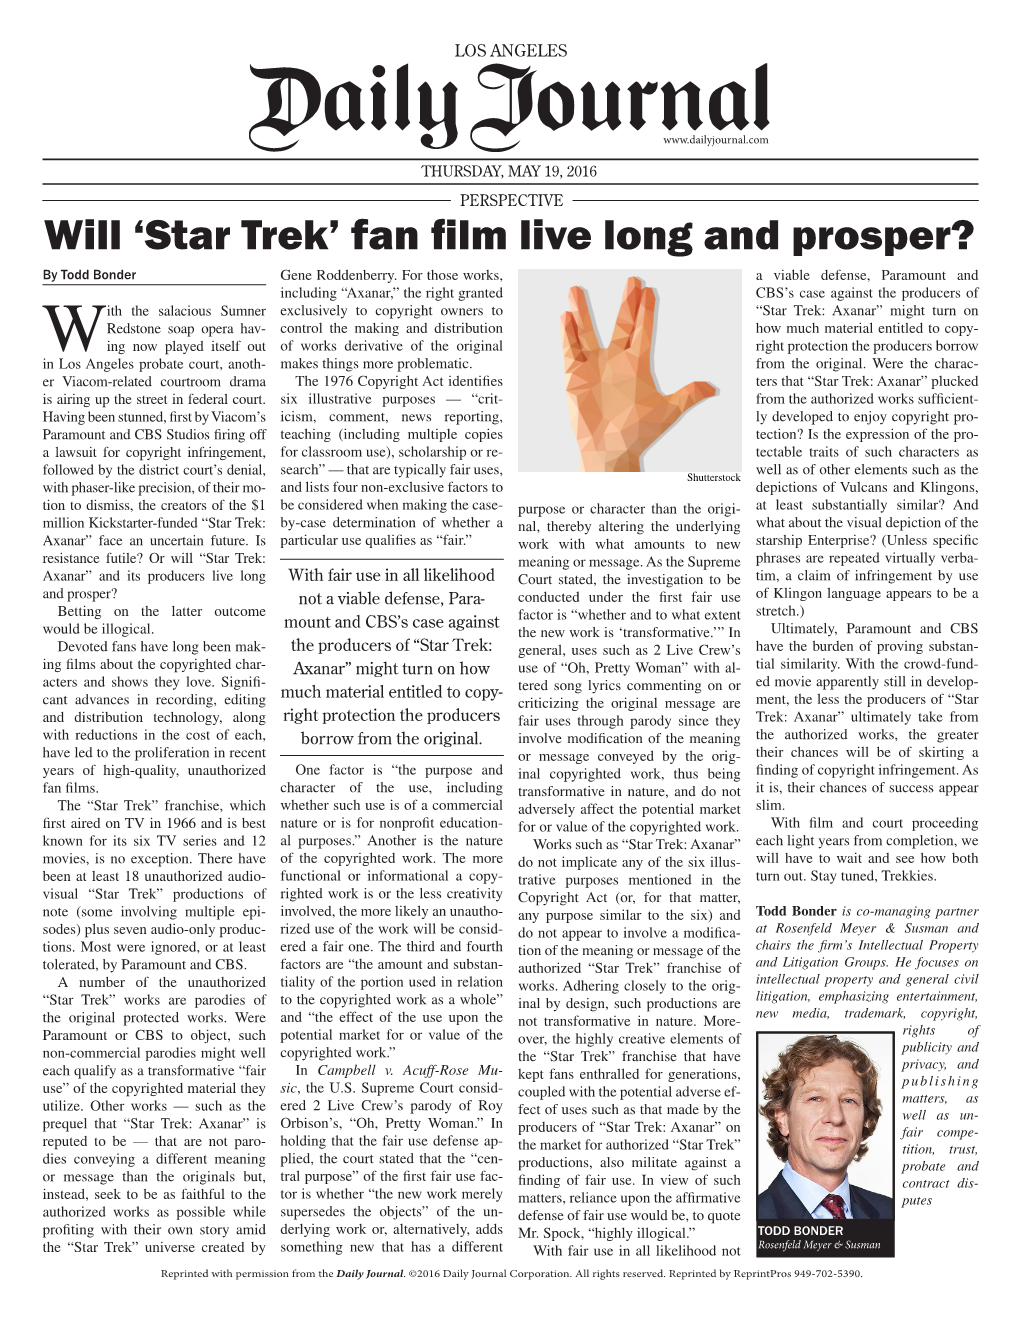 Will 'Star Trek' Fan Film Live Long and Prosper?